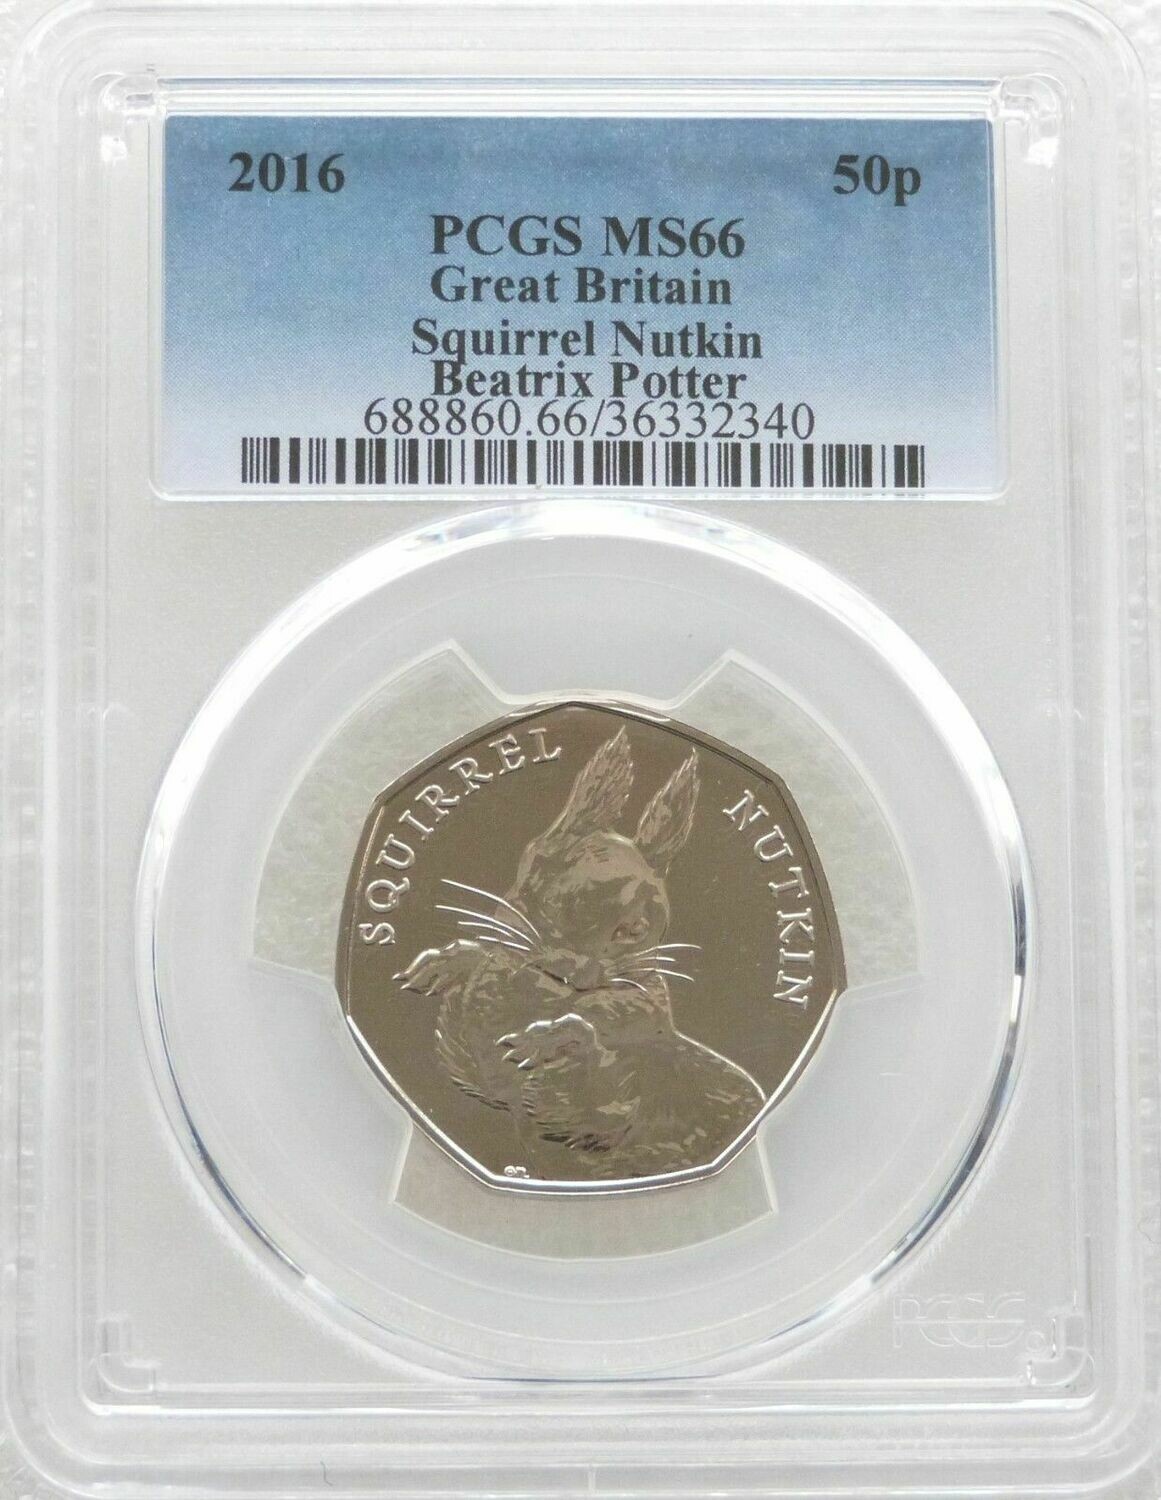 2016 Squirrel Nutkin 50p Brilliant Uncirculated Coin PCGS MS66